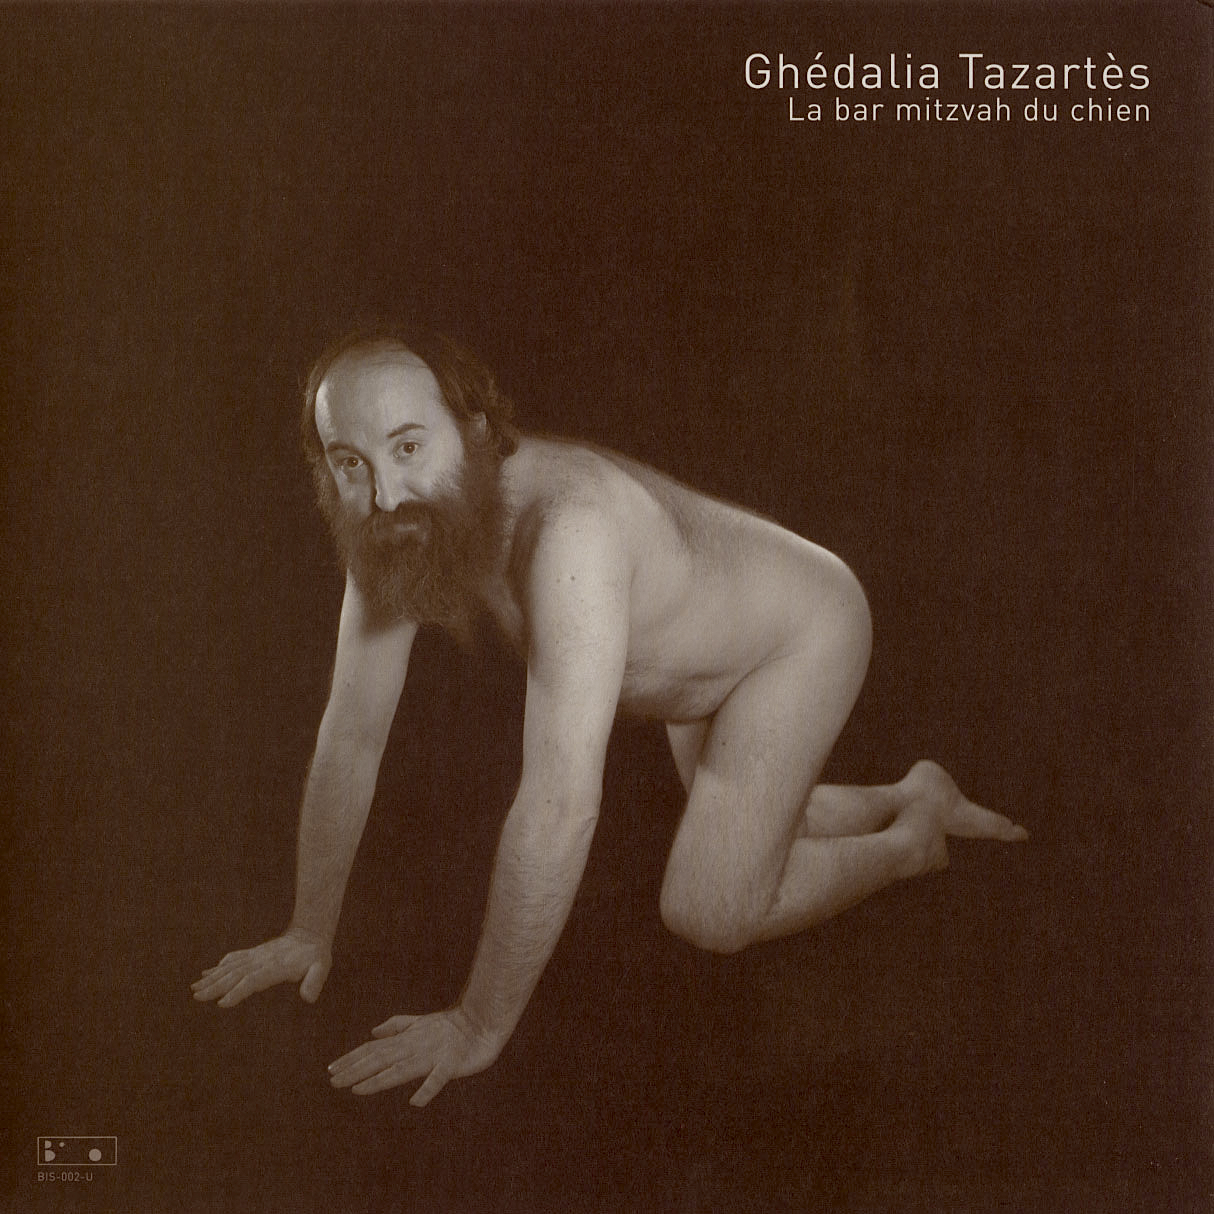 Ghédalia Tazartès has a new album out 